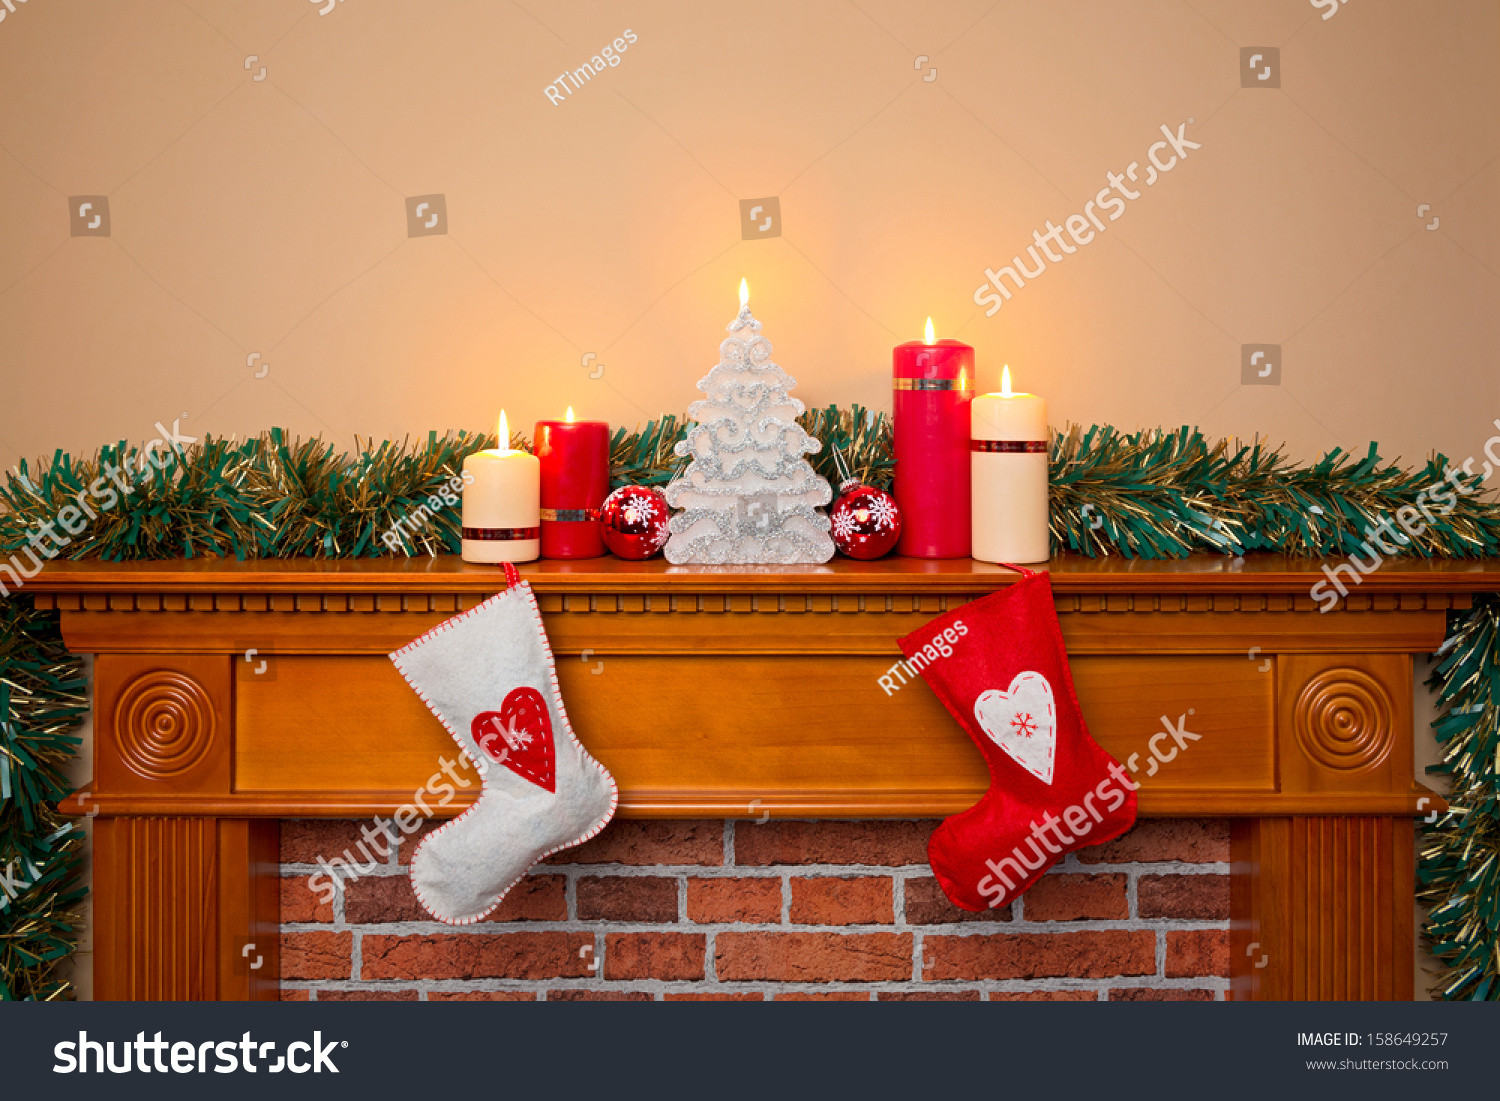 Christmas Stockings Hanging Over Fireplace
 Christmas Stockings Hanging Over A Fireplace With Candles